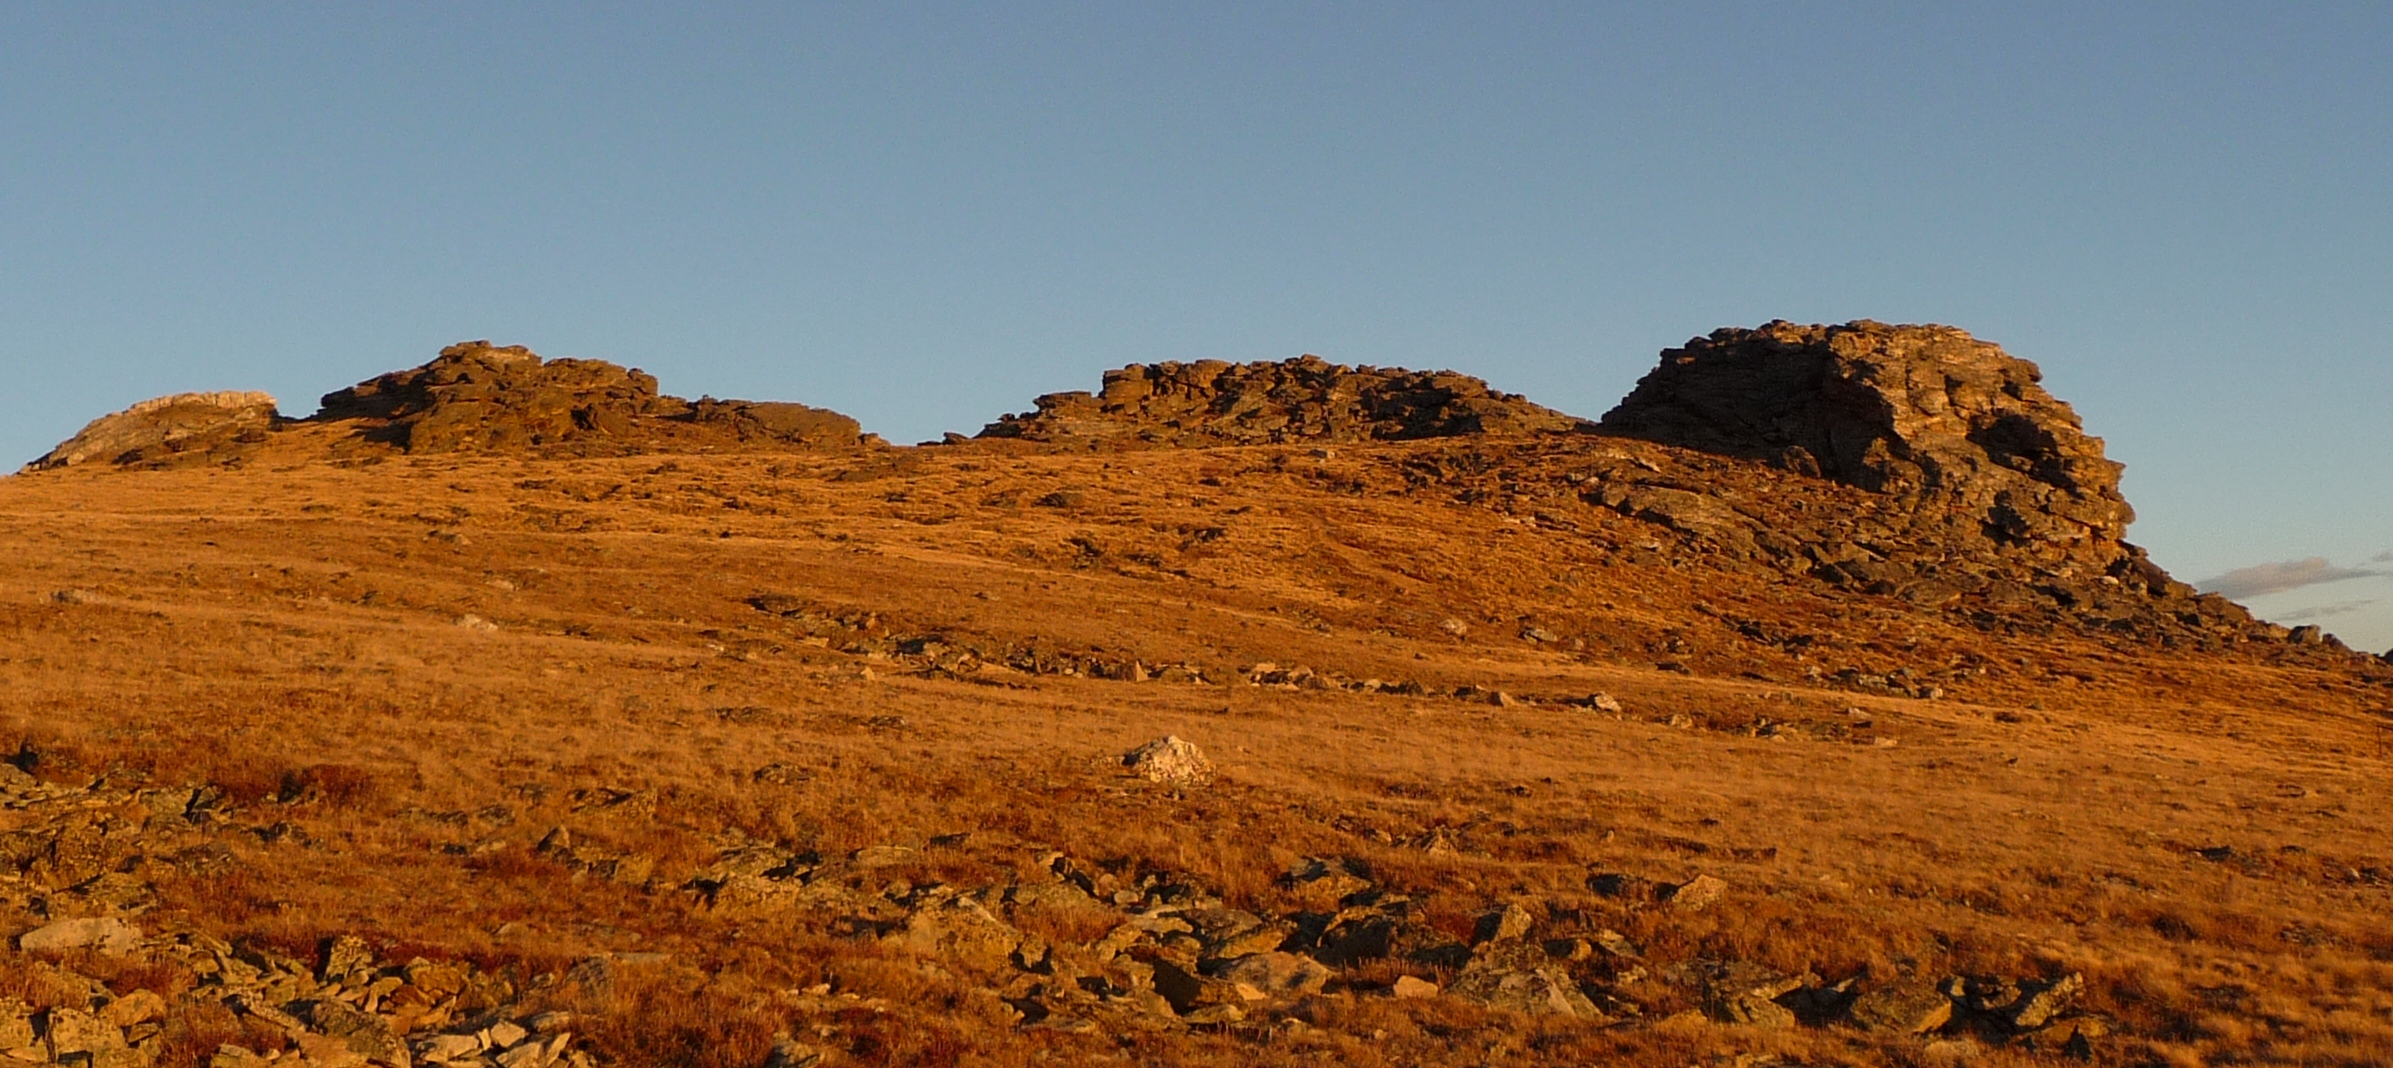 File:Rocky Mountain National Park in September 2011 - rocks near ...